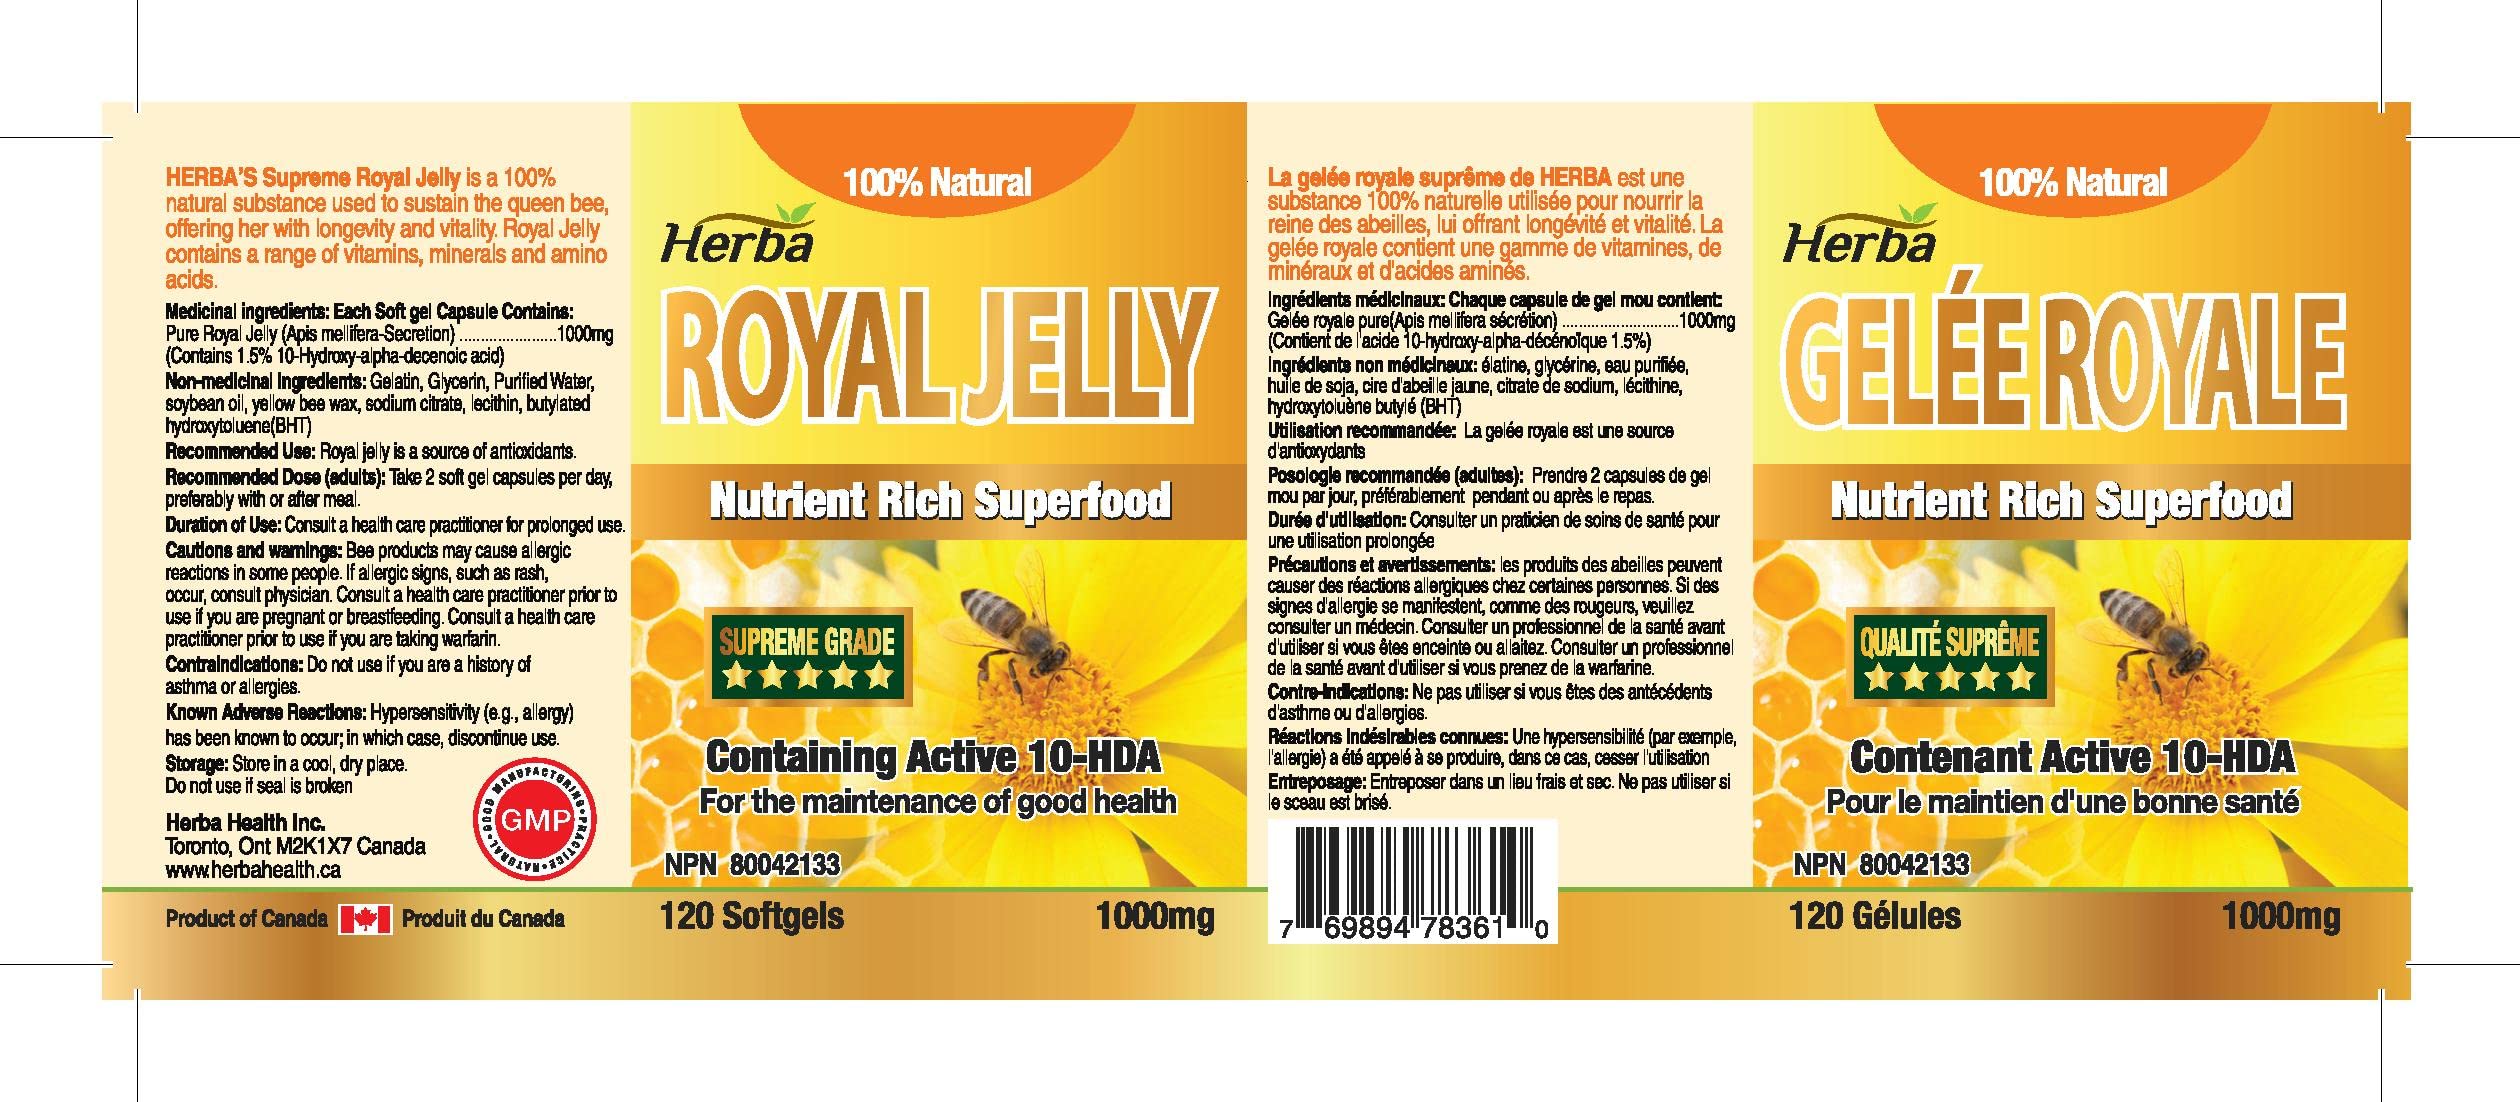 Herba Royal Jelly Capsules 1000mg - 120 Softgels